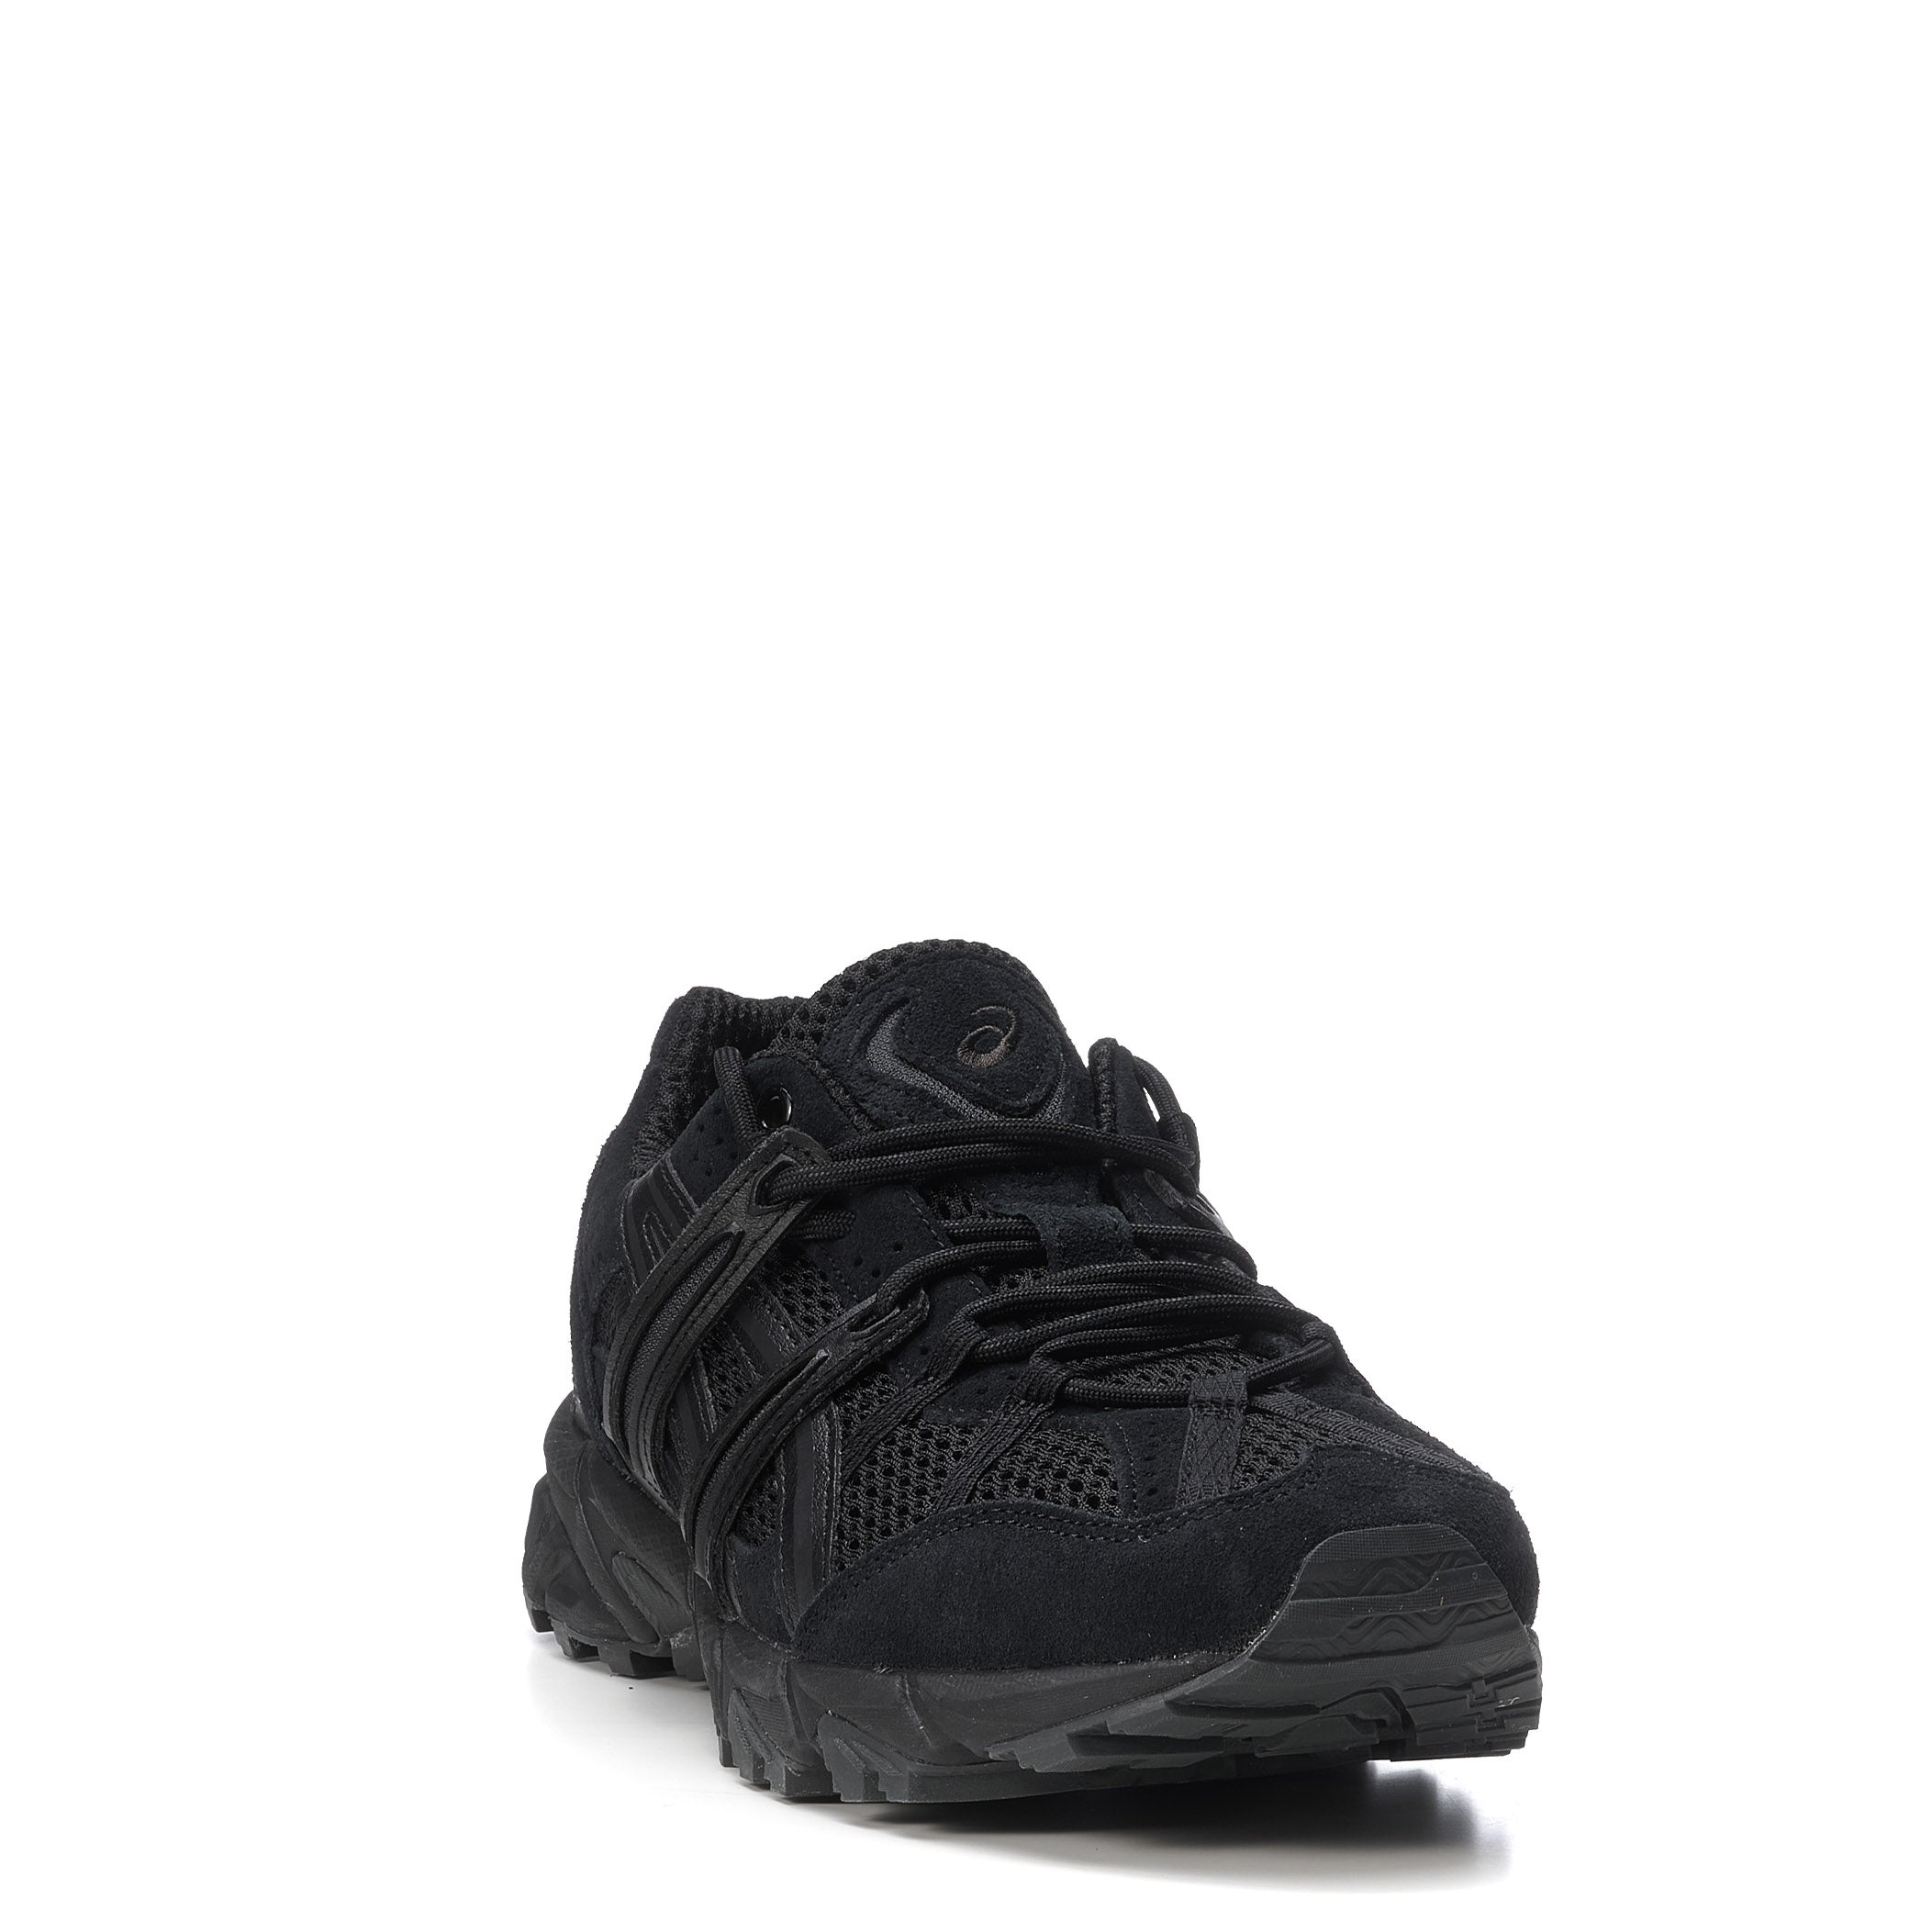 Sneaker total black